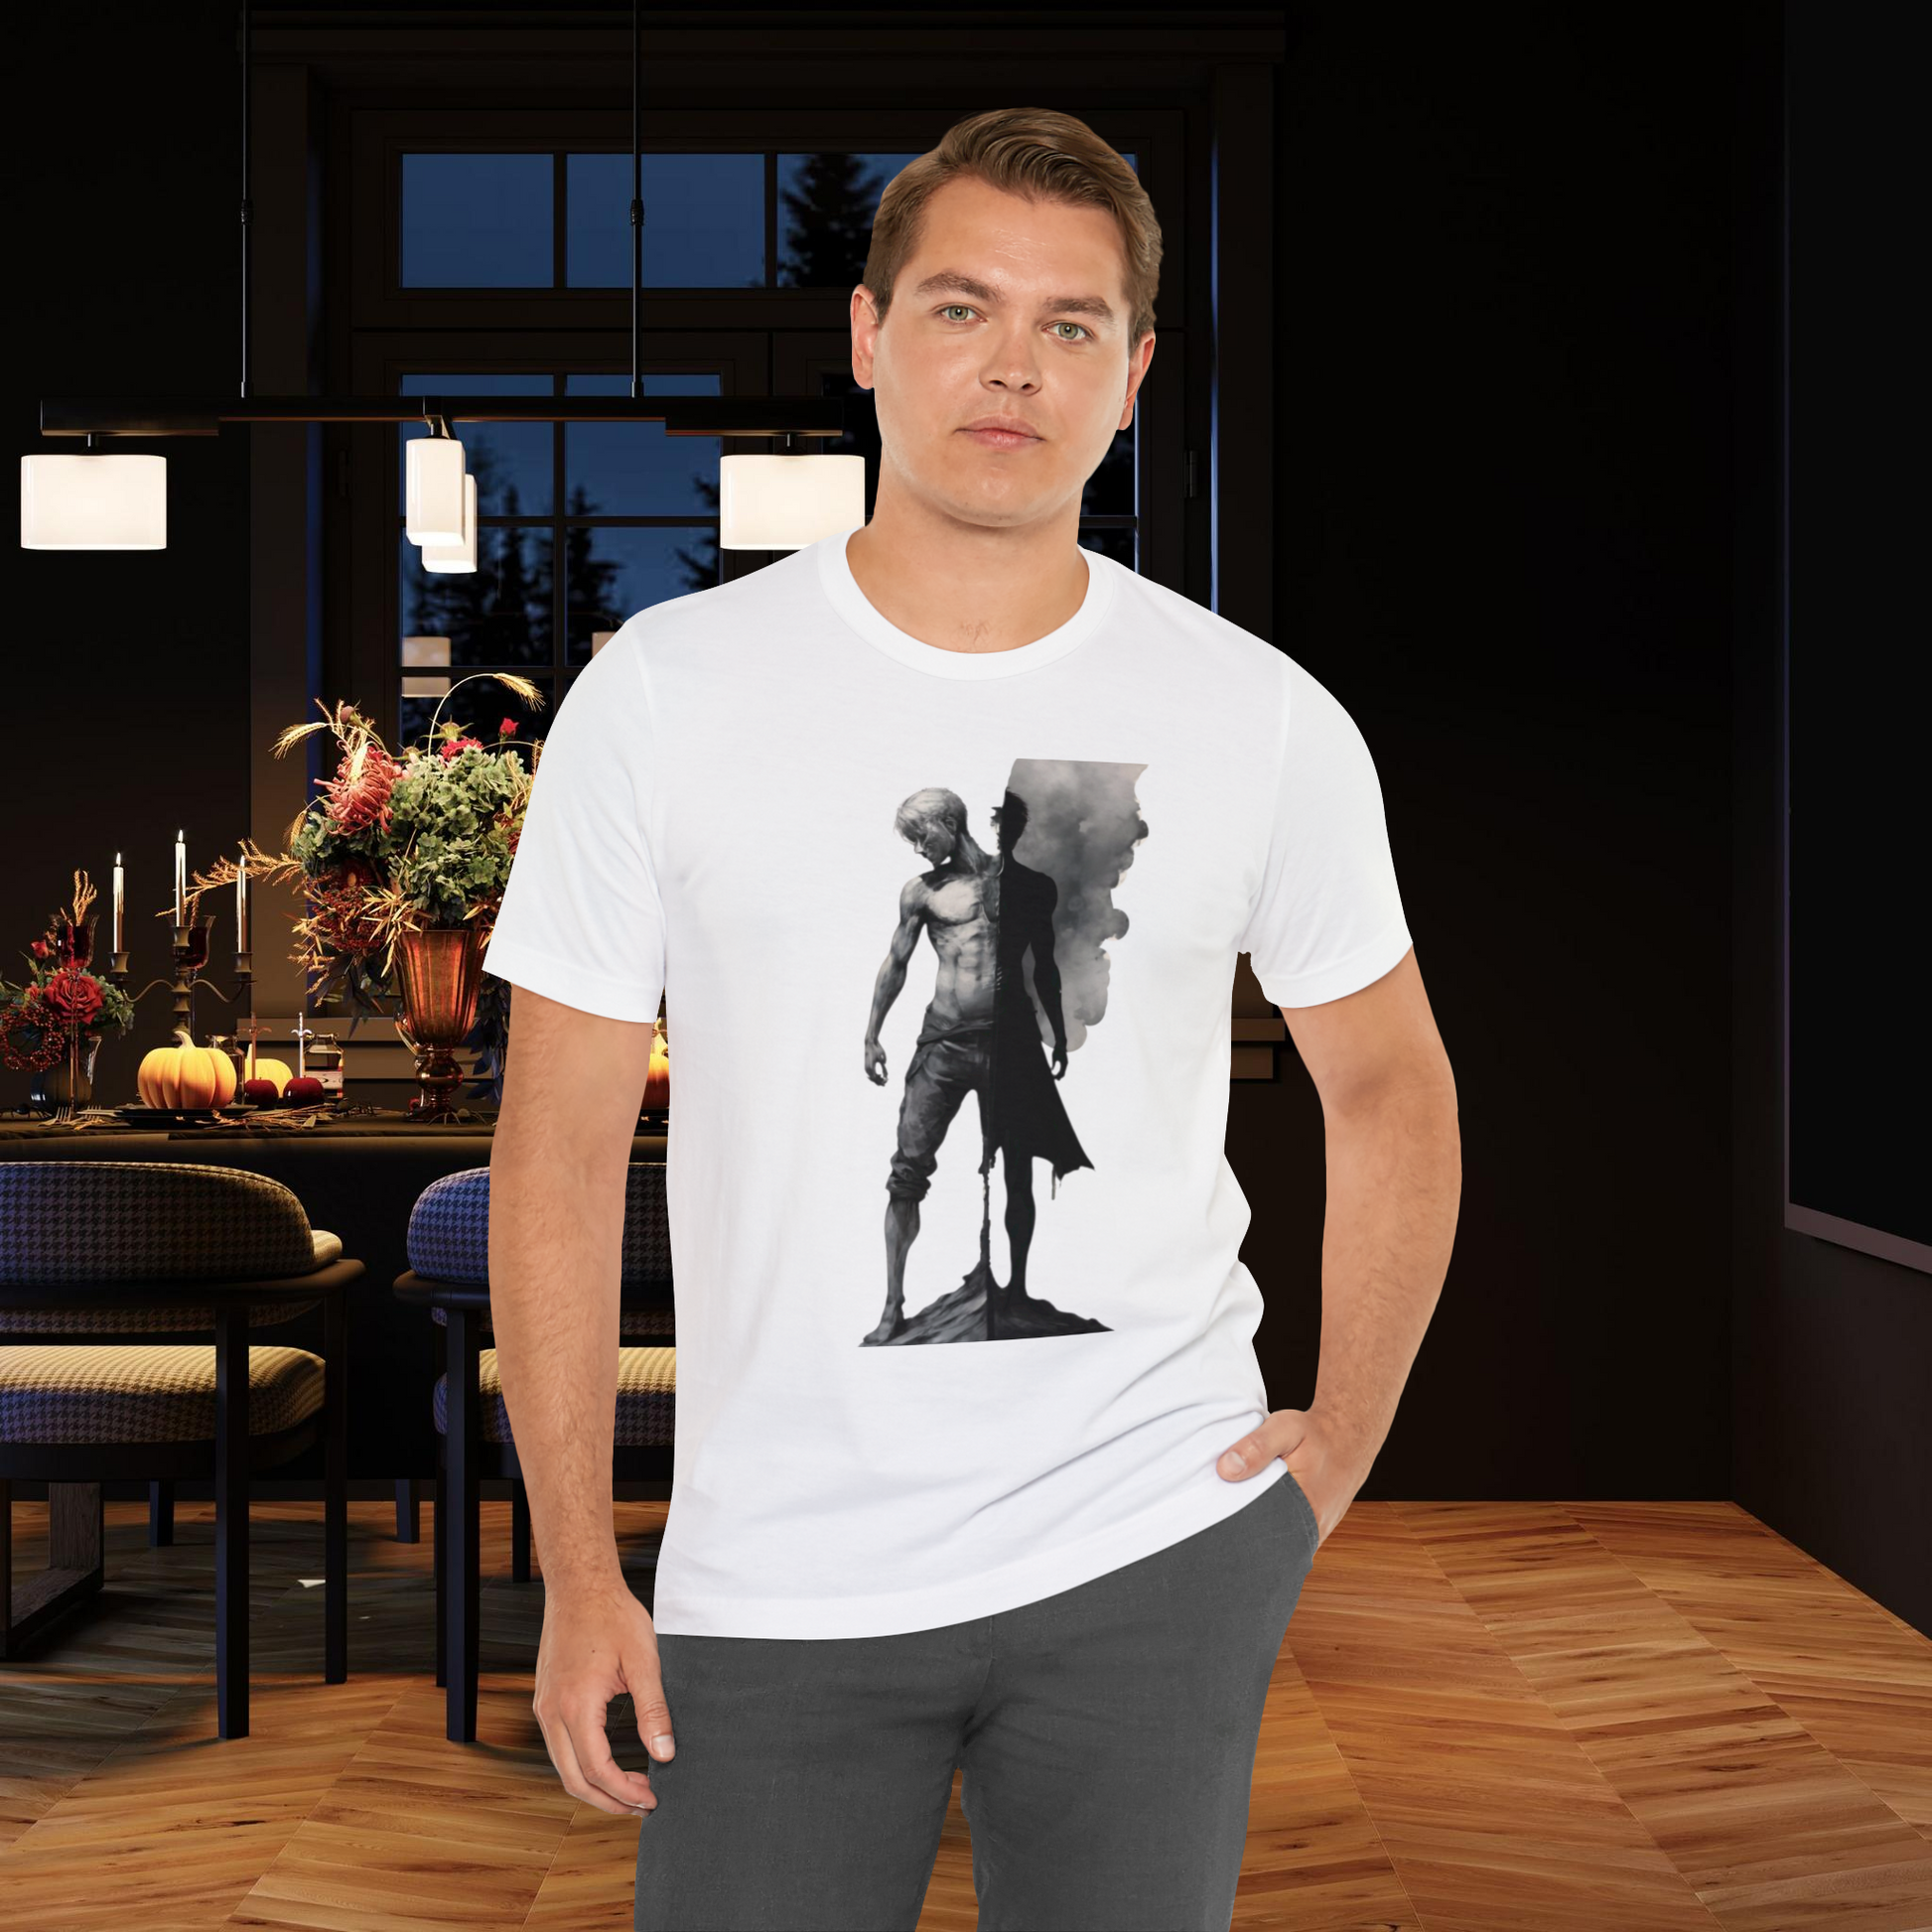 Duality of Soul - Crisp Male Anatomy T-shirt T-Shirt   